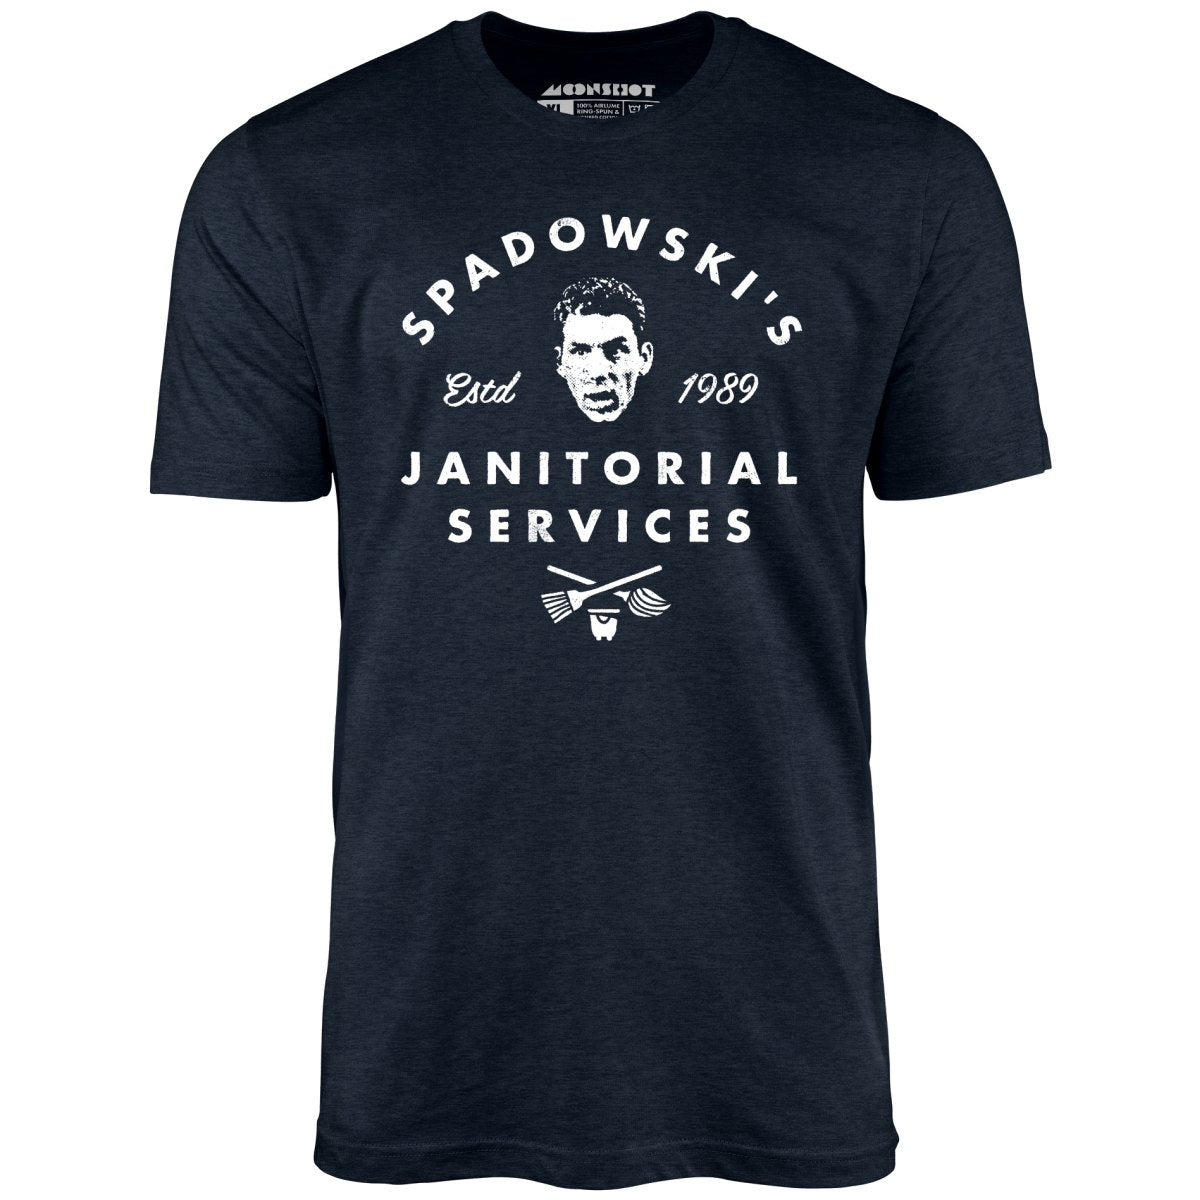 UHF Spadowski's Janitorial Services - Unisex T-Shirt